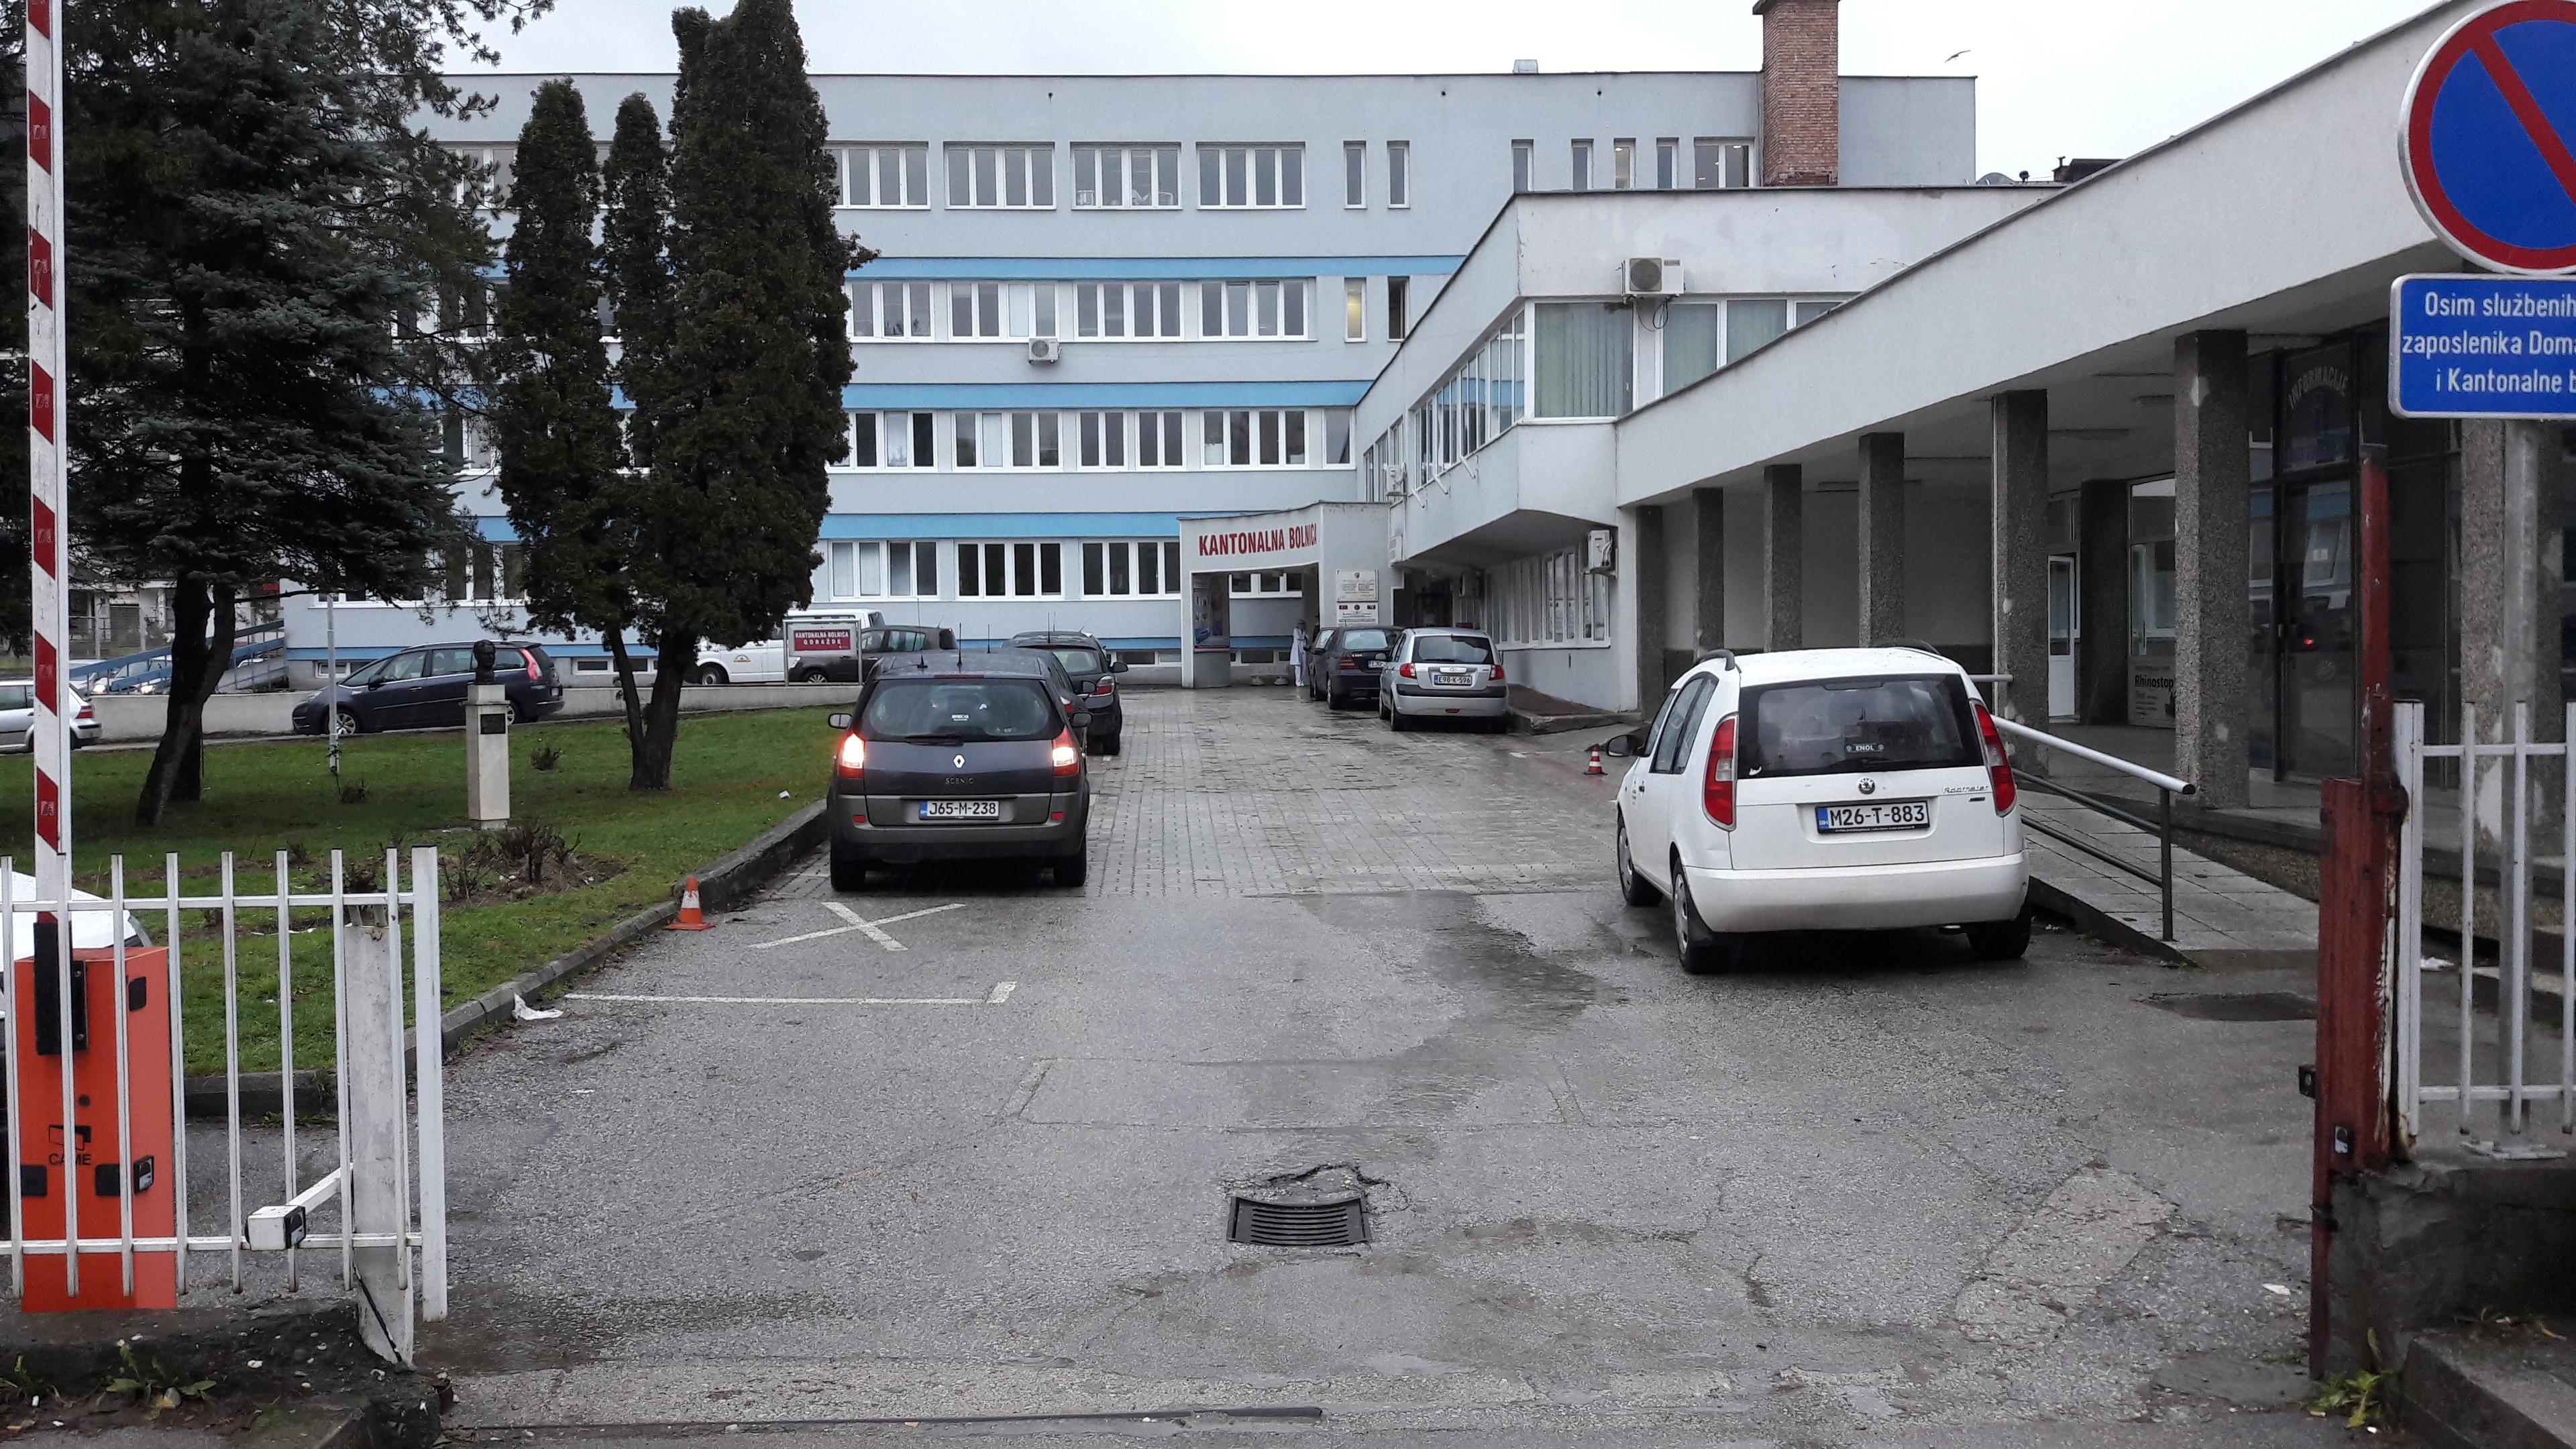 Kantonalna bolnica Goražde - Avaz